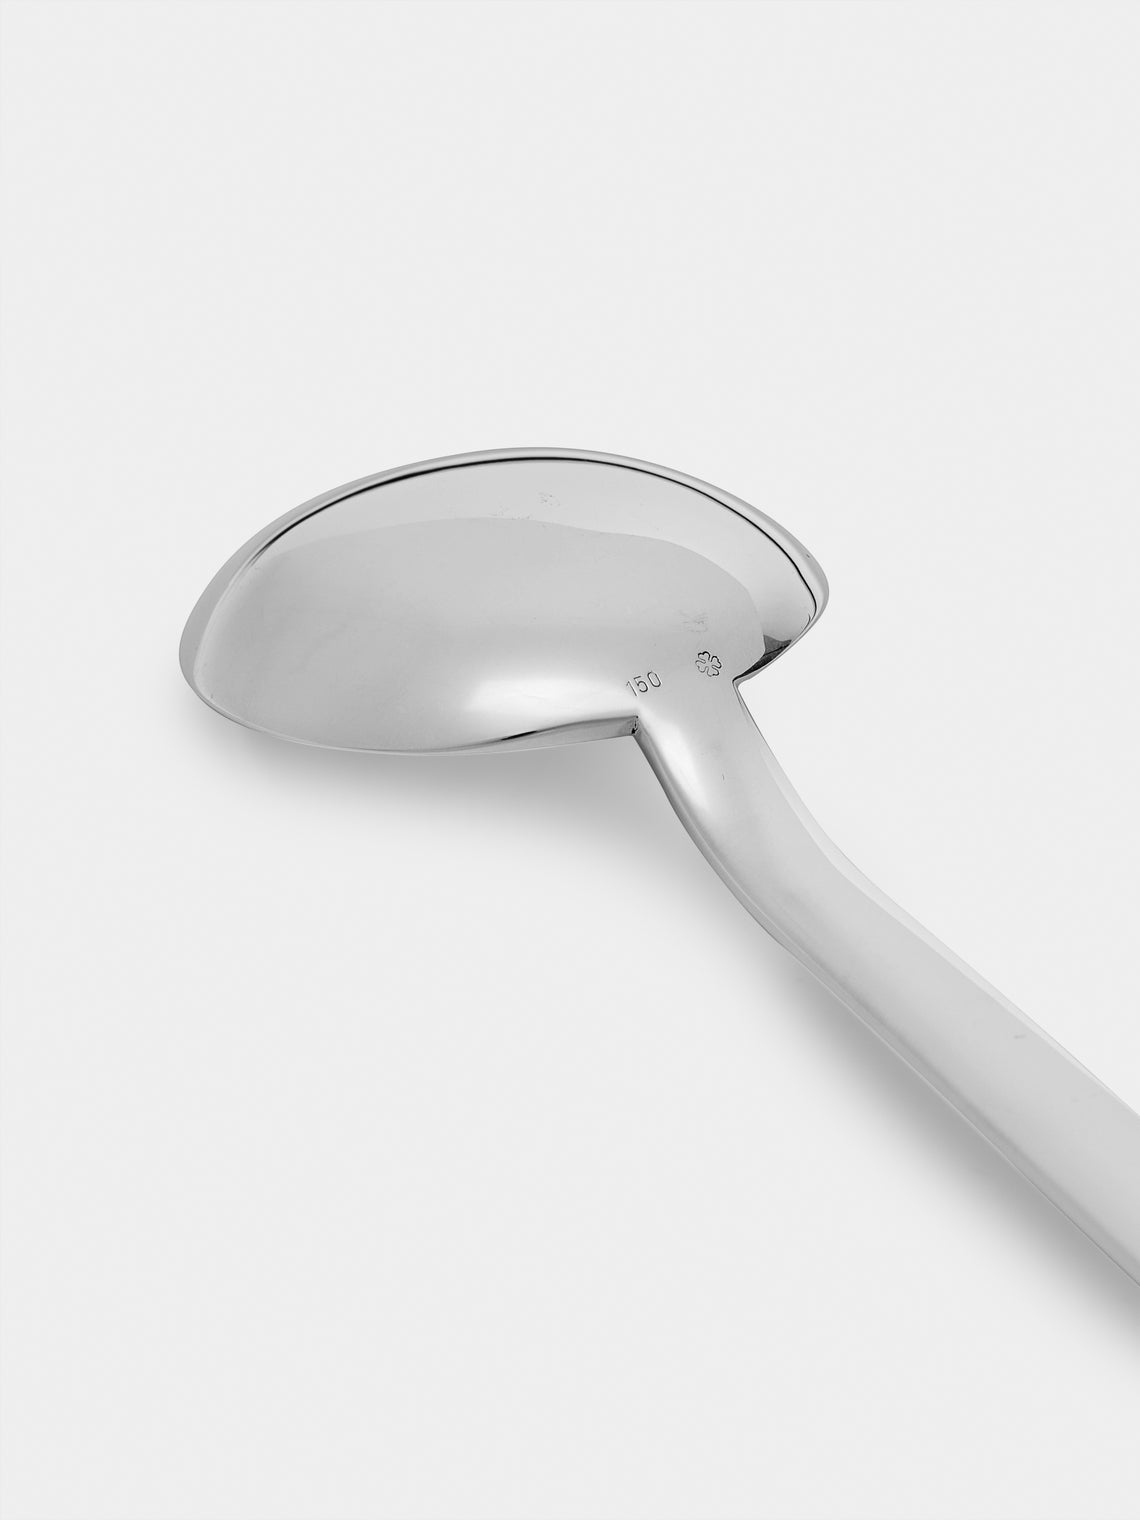 Wiener Silber Manufactur - Josef Hoffmann 135 Silver-Plated Dinner Spoon -  - ABASK